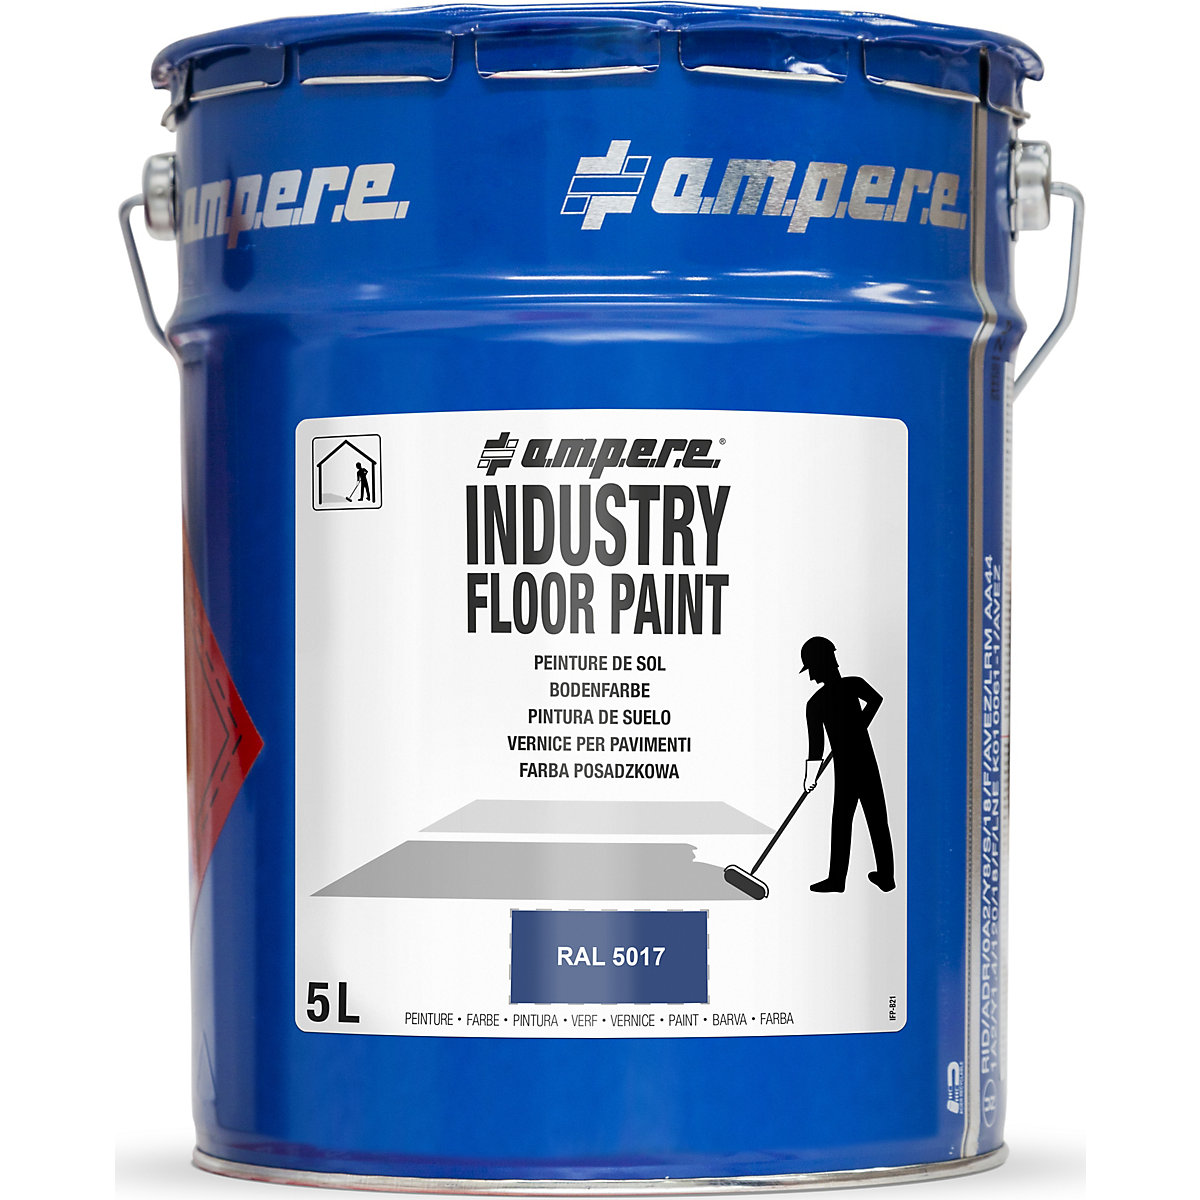 Peinture de marquage des sols Industry Floor Paint® – a.m.p.e.r.e, contenu 5 l, bleu